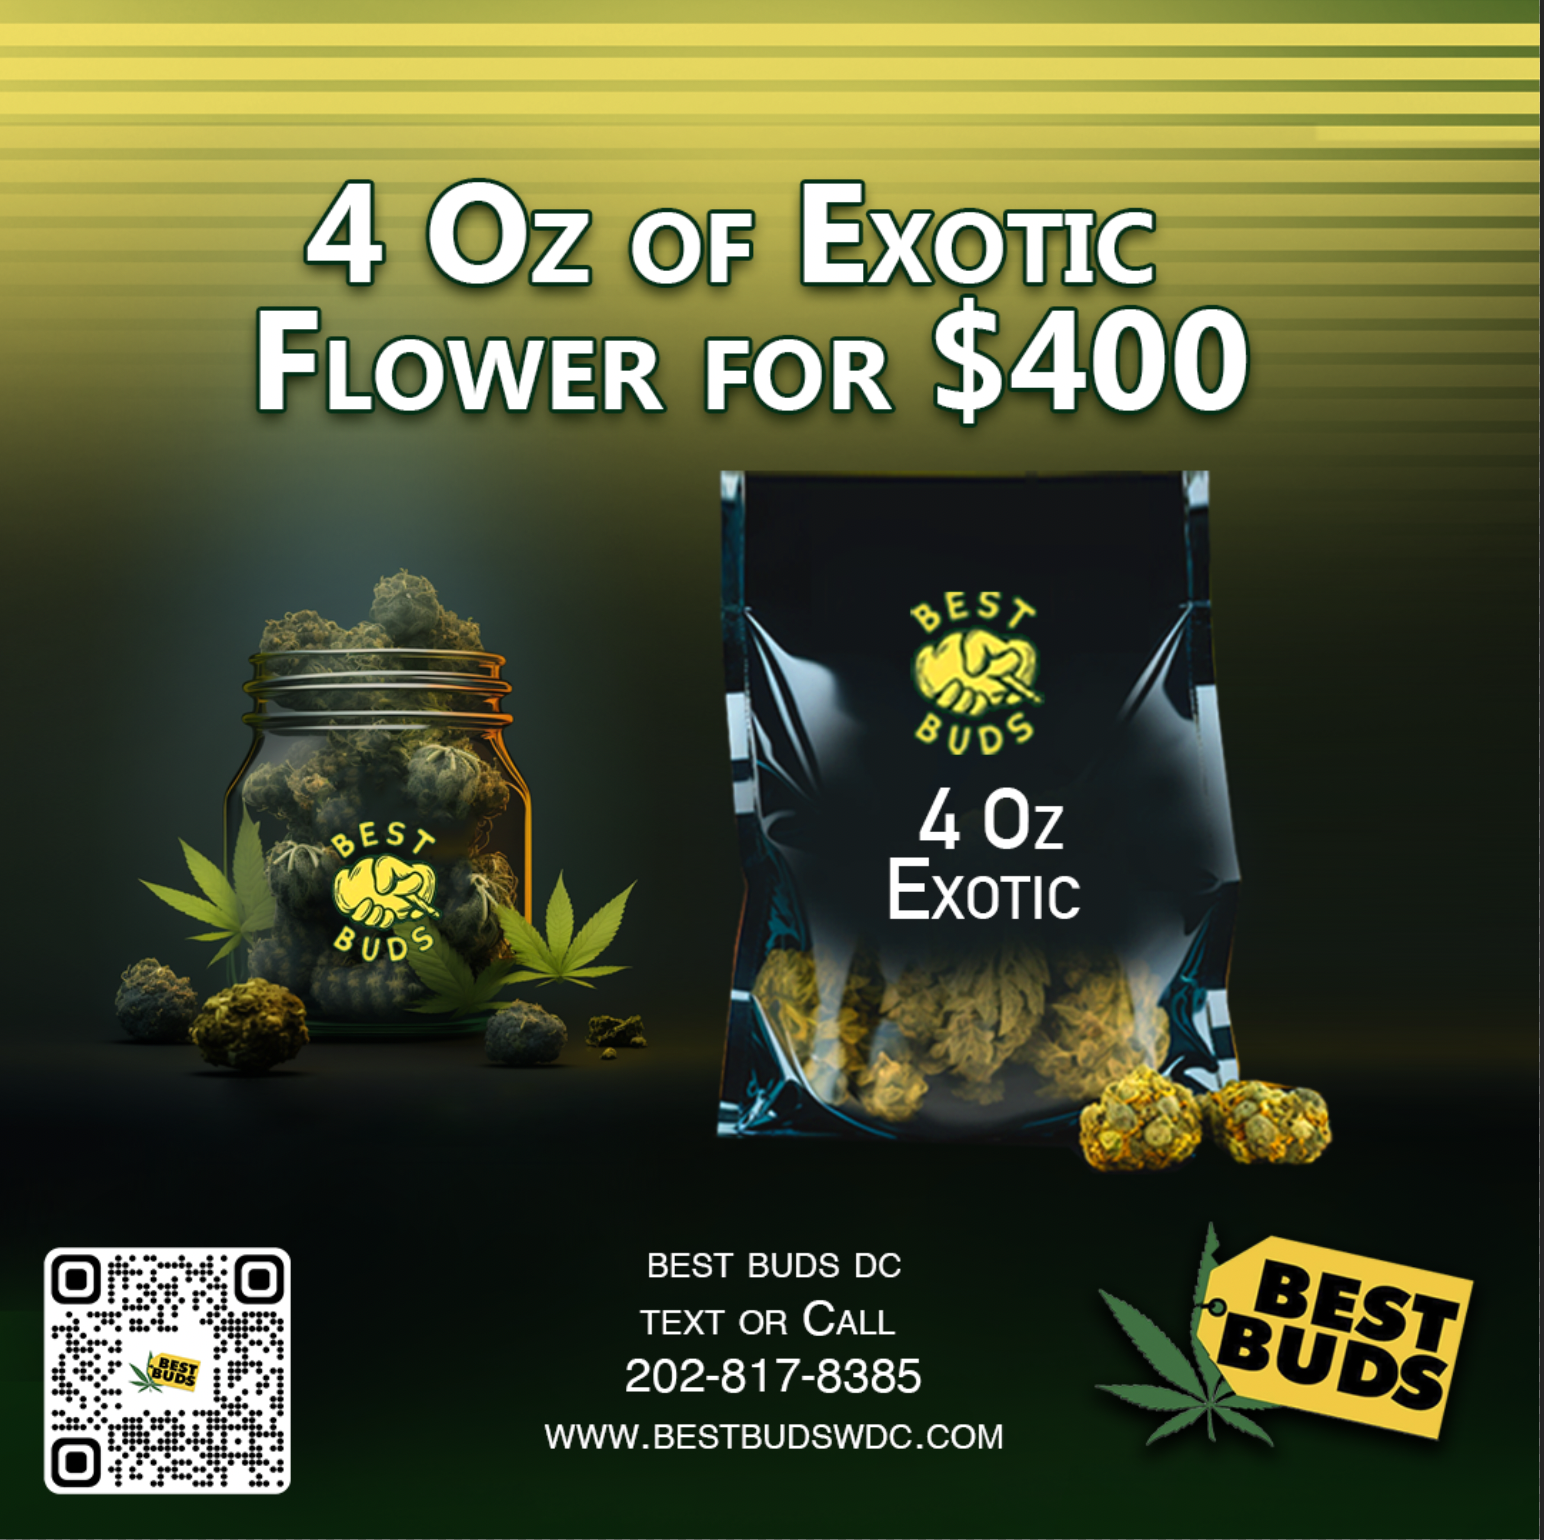 4 Oz of Exotic Flower for 700$